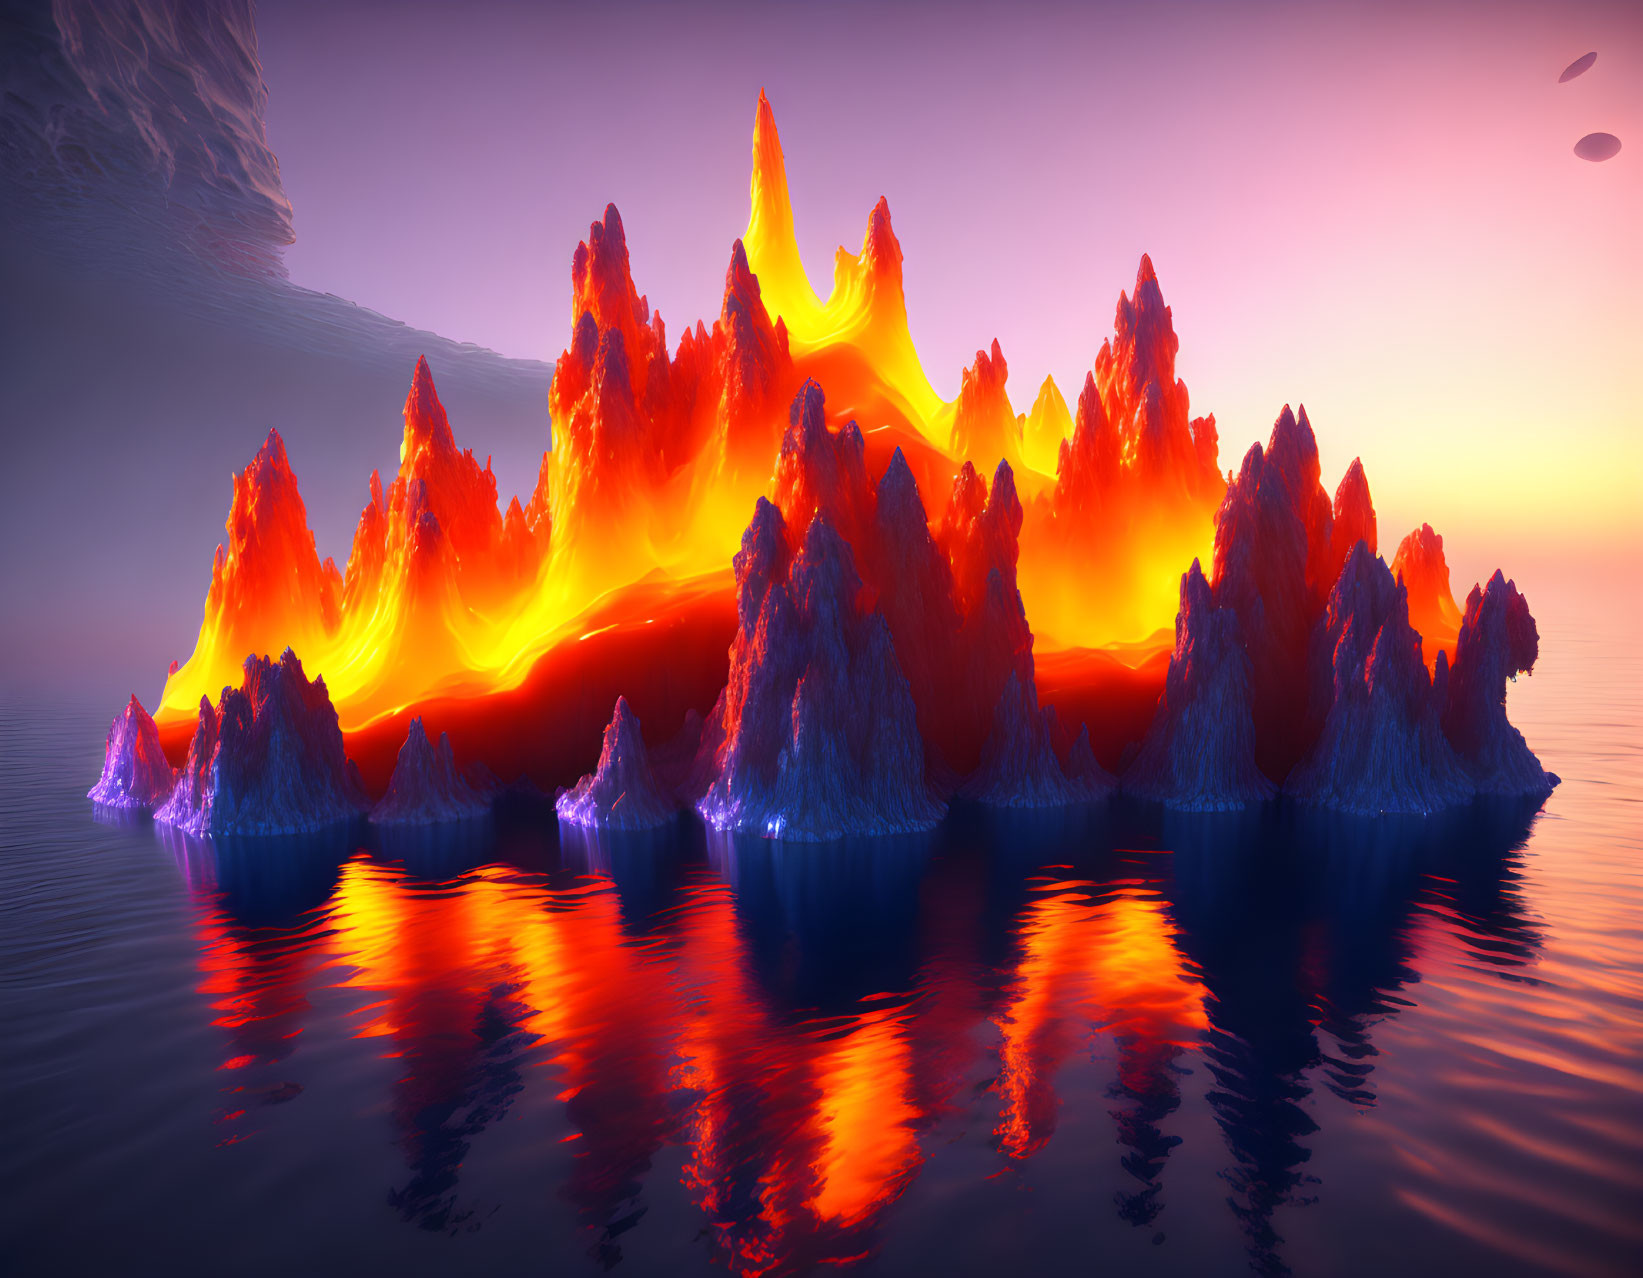 Fiery lava formation landscape with purple sky